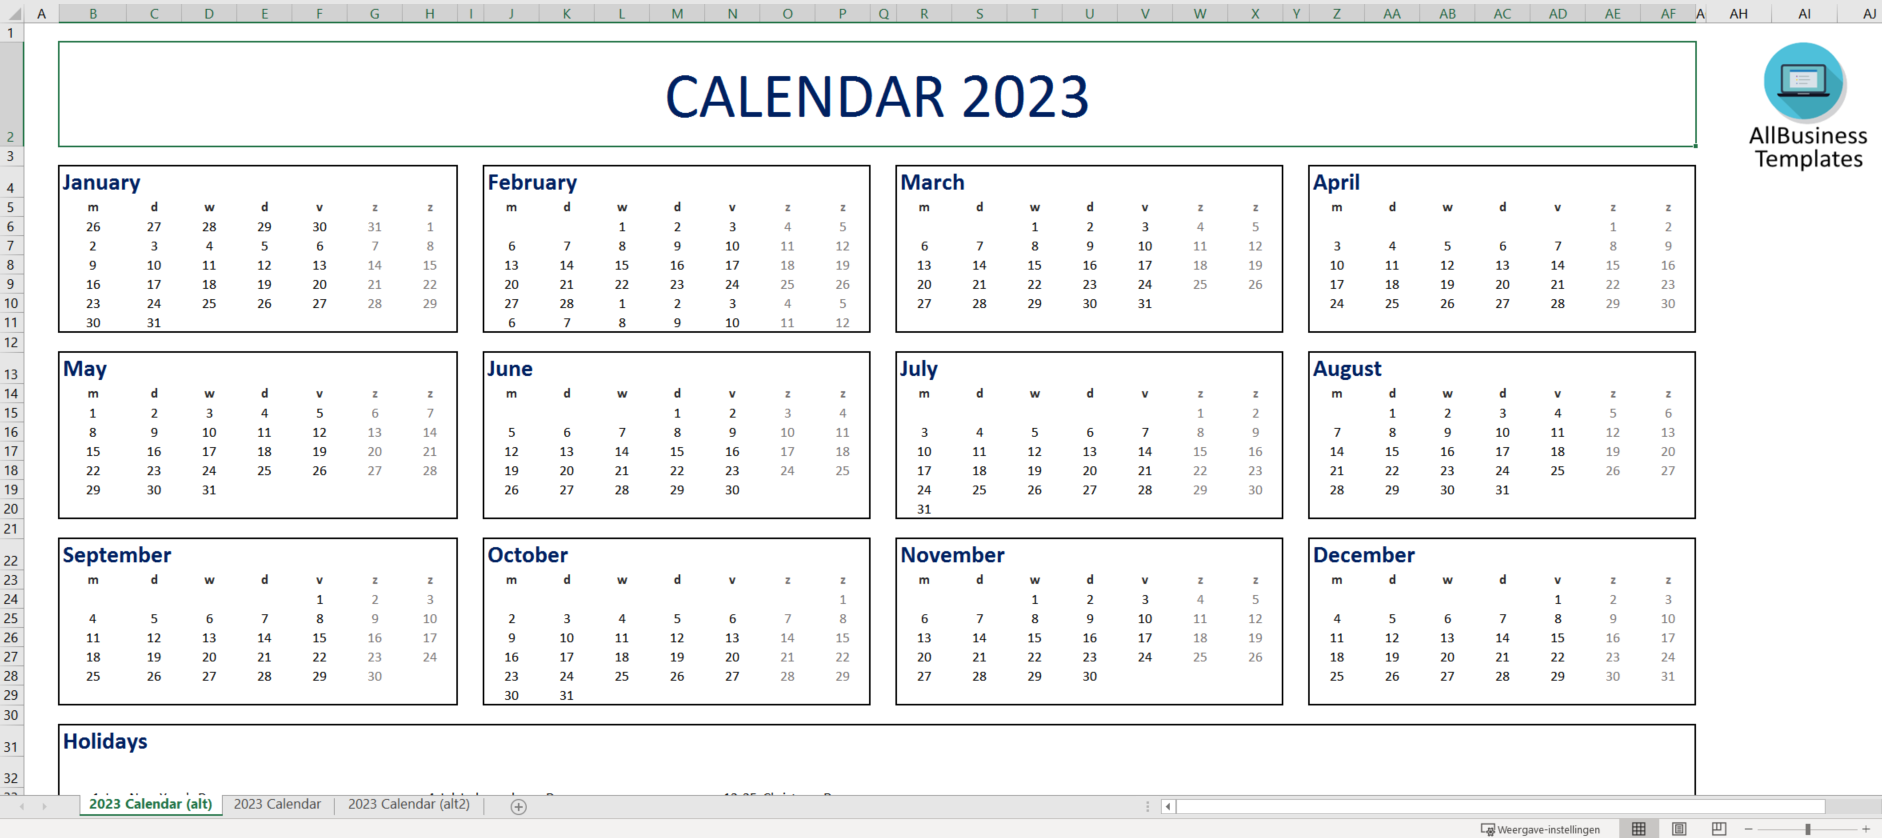 Calendar 2023 Excel Templates At Allbusinesstemplates Com